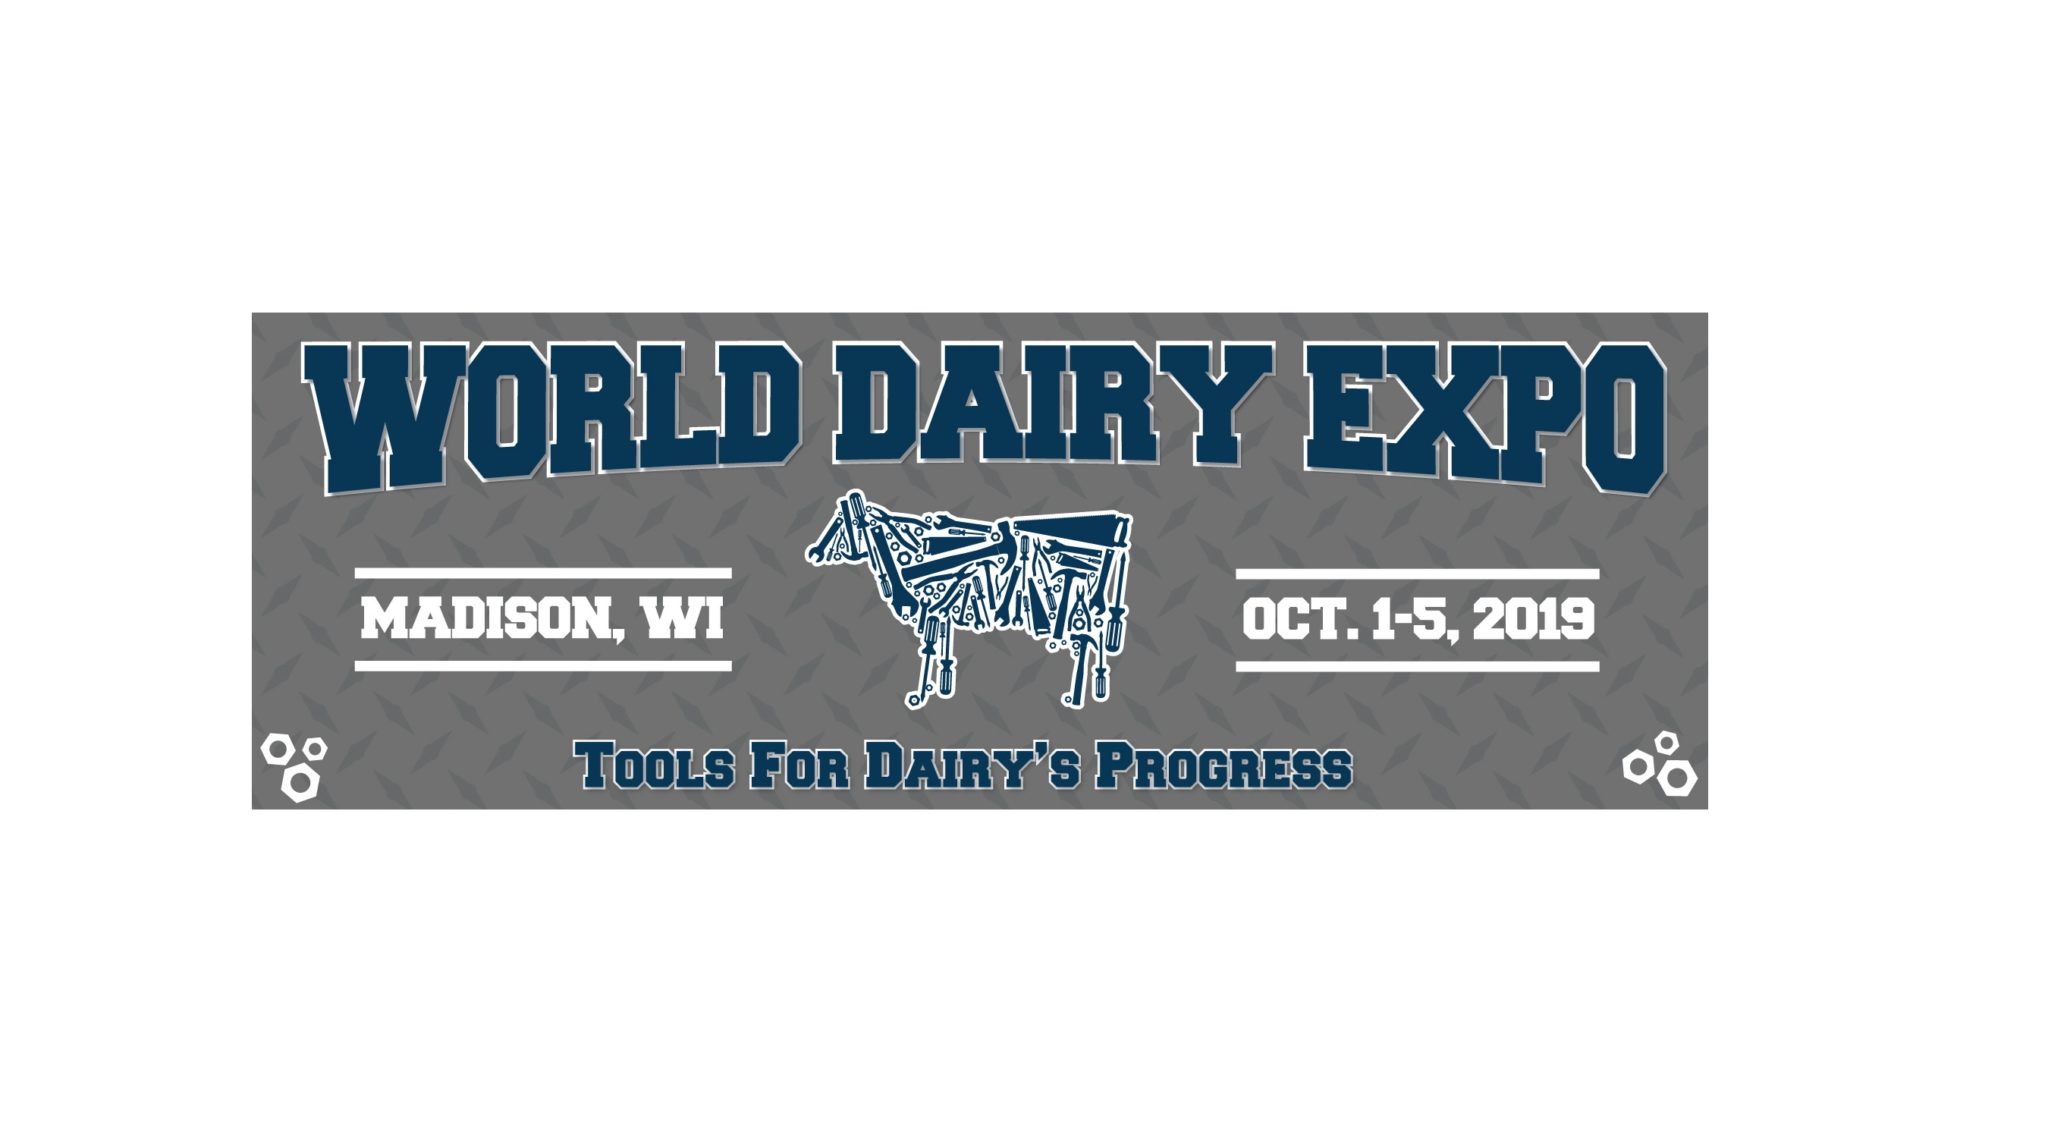 world dairy expo dates 2017